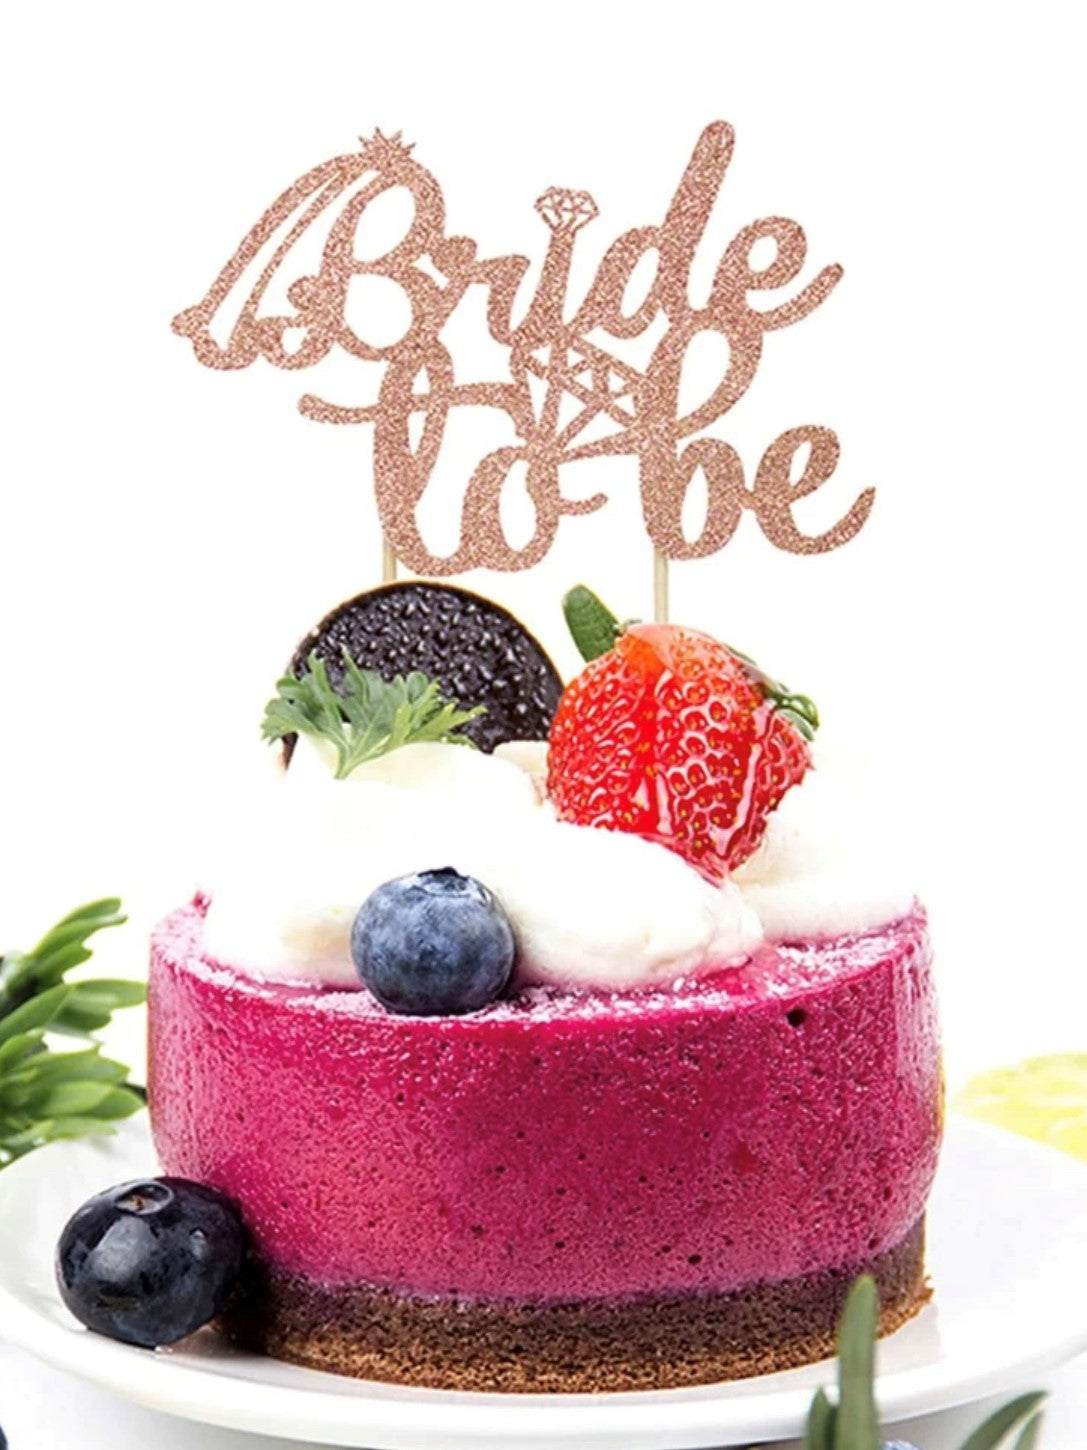 Cake topper tårtdekoration "Bride to be" rosé